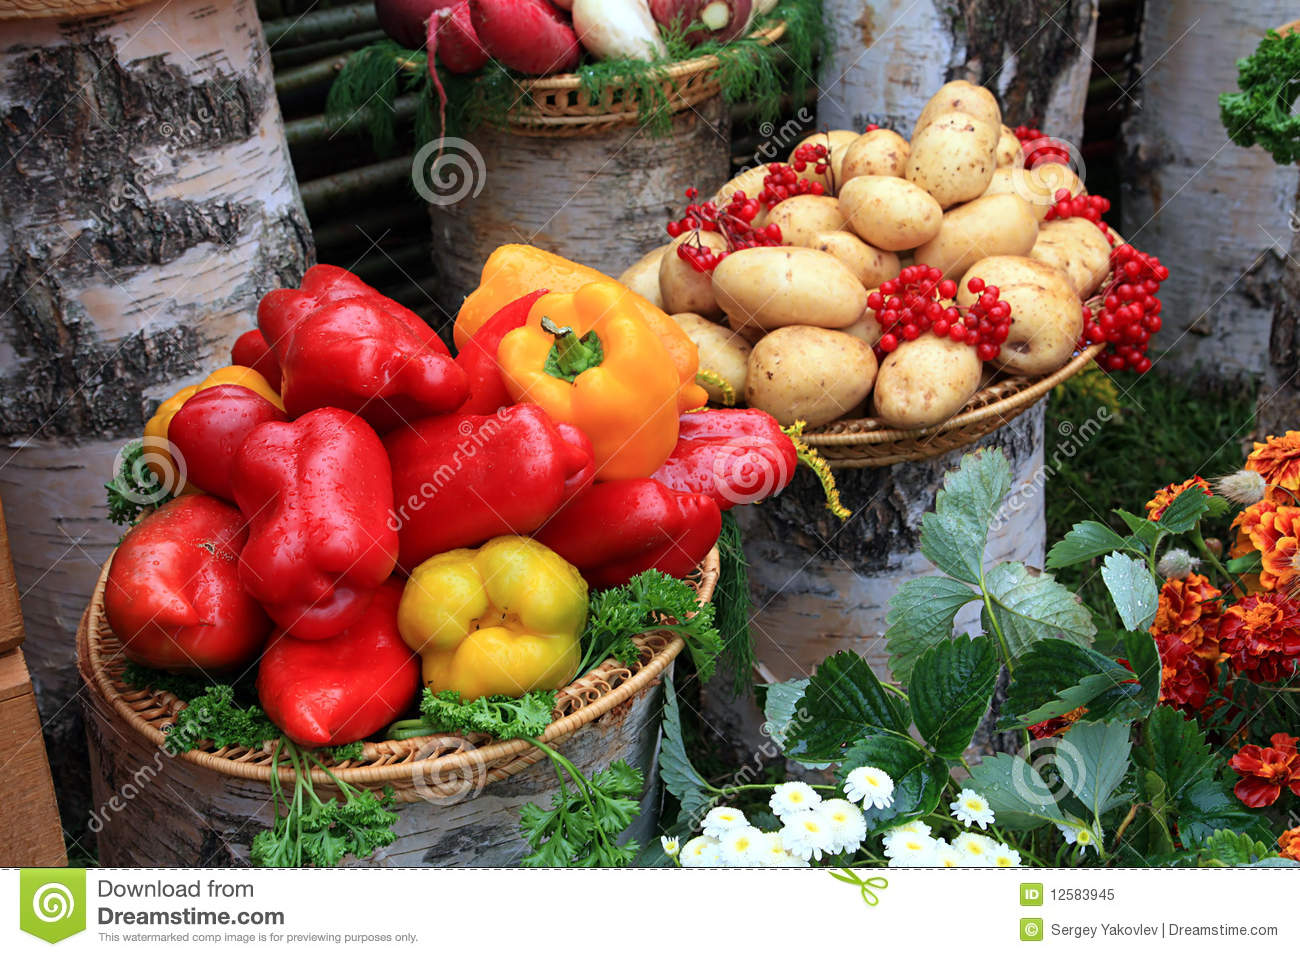 Vegetable Background Royalty Free Stock Photo   Image  12583945